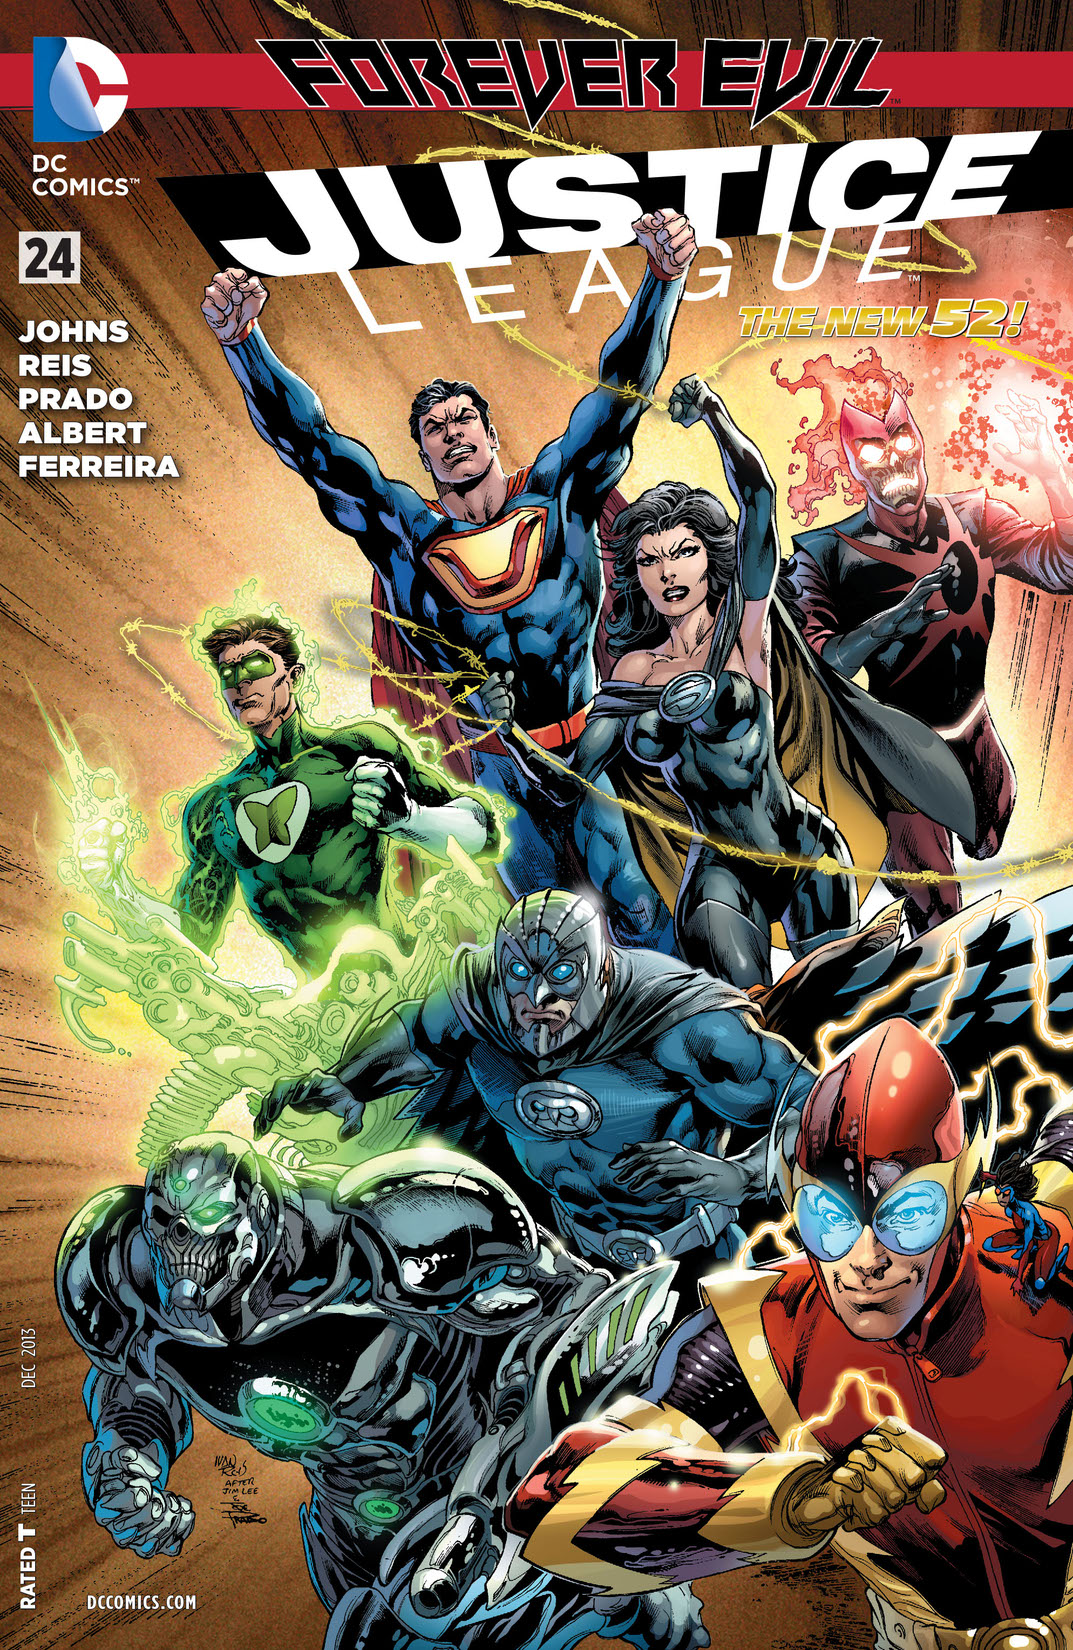 Justice League (2011-) #24 preview images